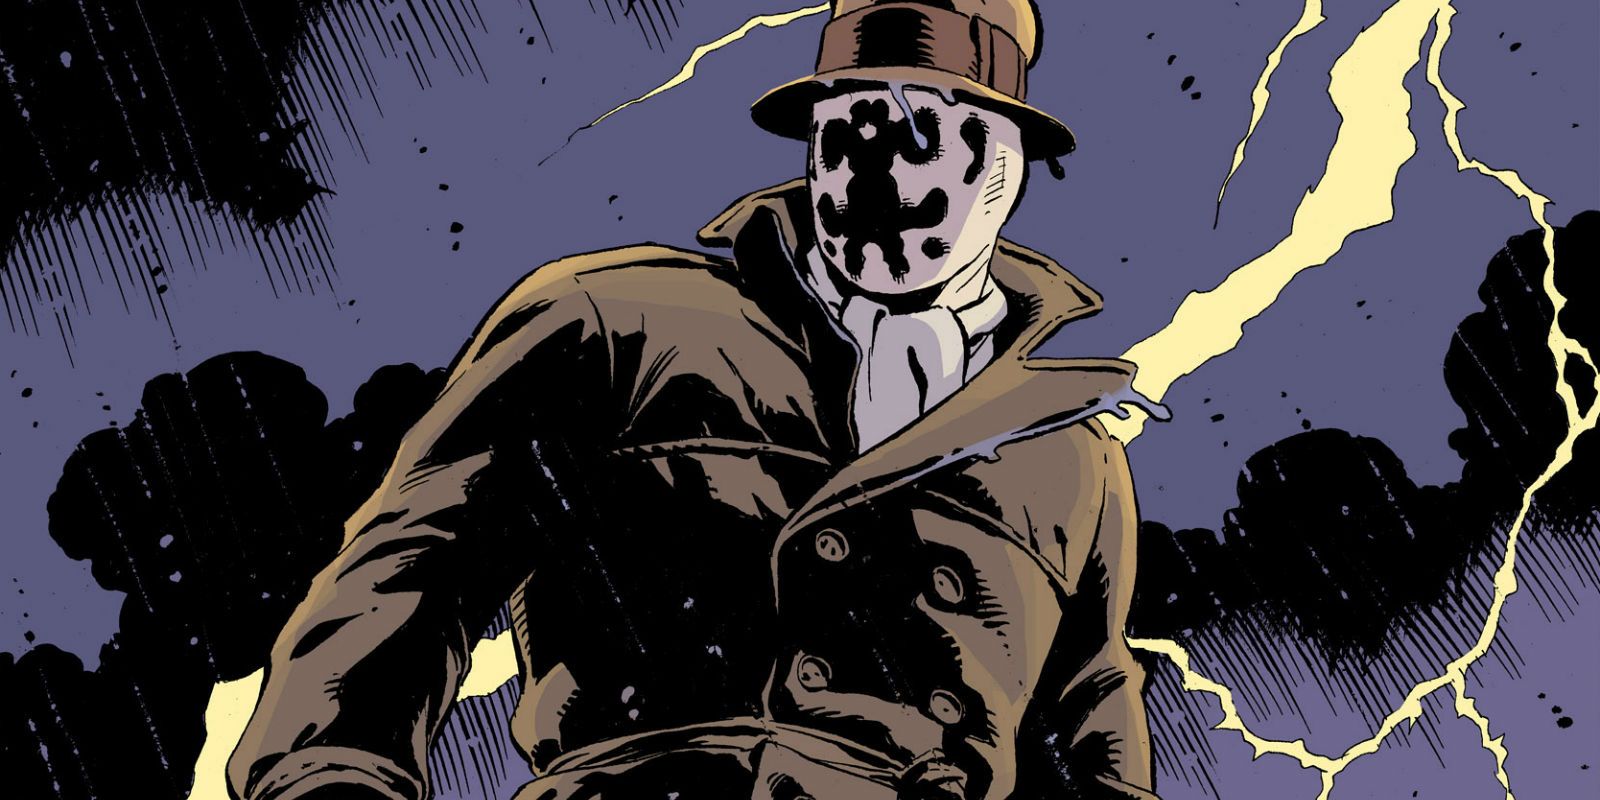 Watchmen – Rorschach art by Dave Gibbons